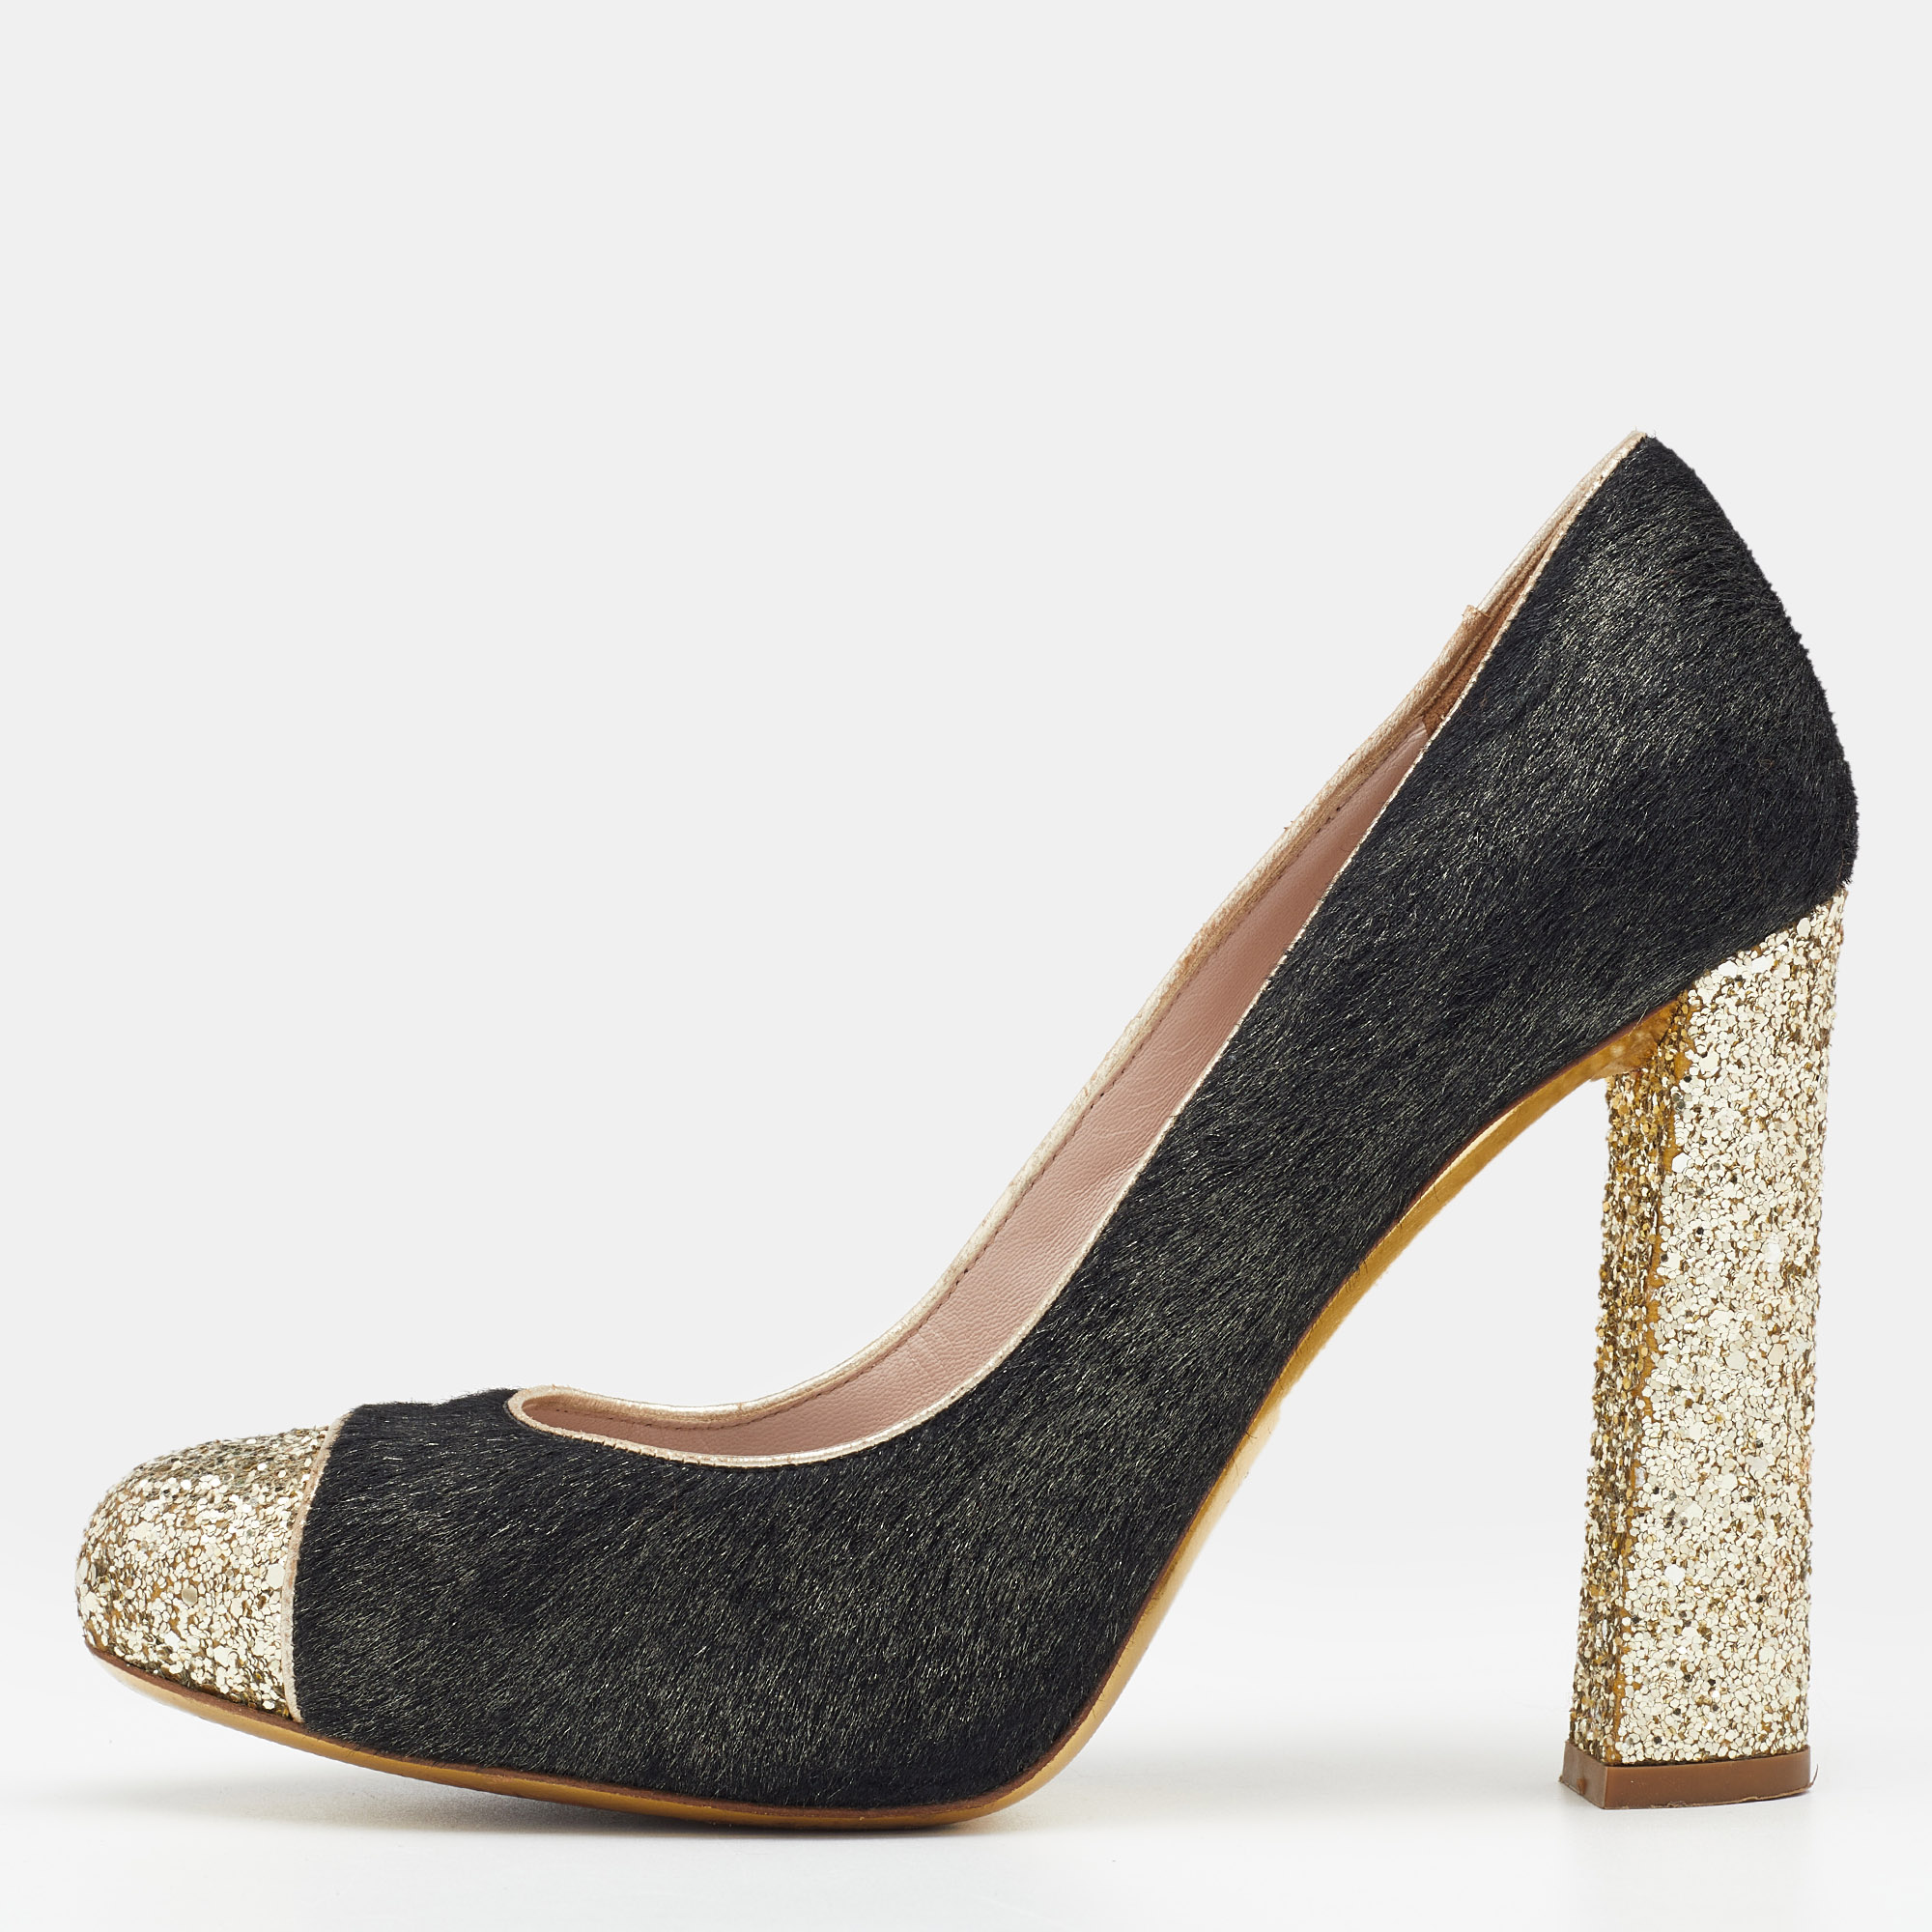 Miu miu black/gold calf hair and glitter cap toe block heel pumps size 37.5